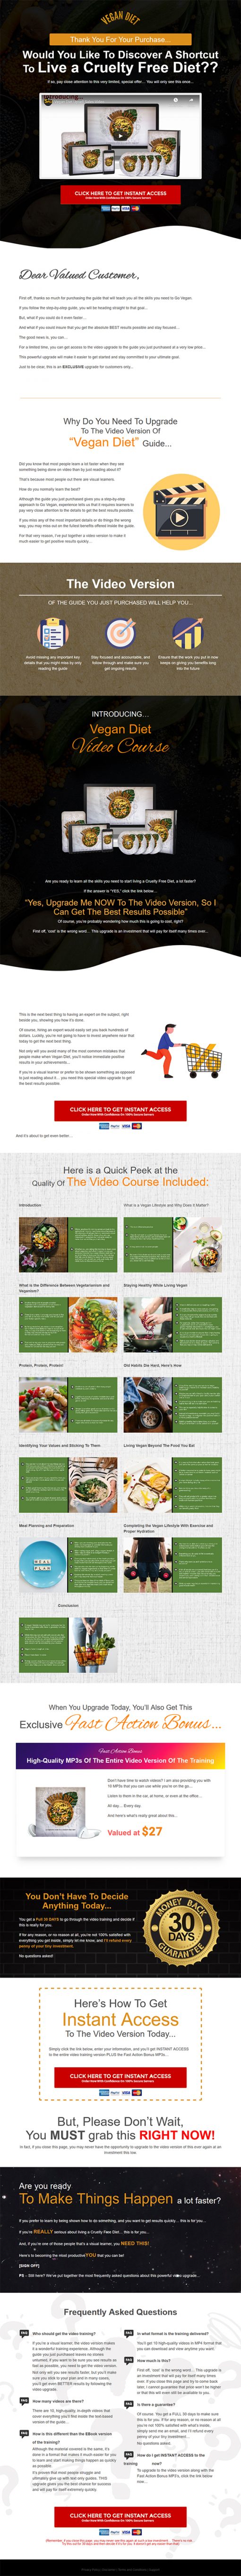 Vegan Diet Ebook and Videos MRR